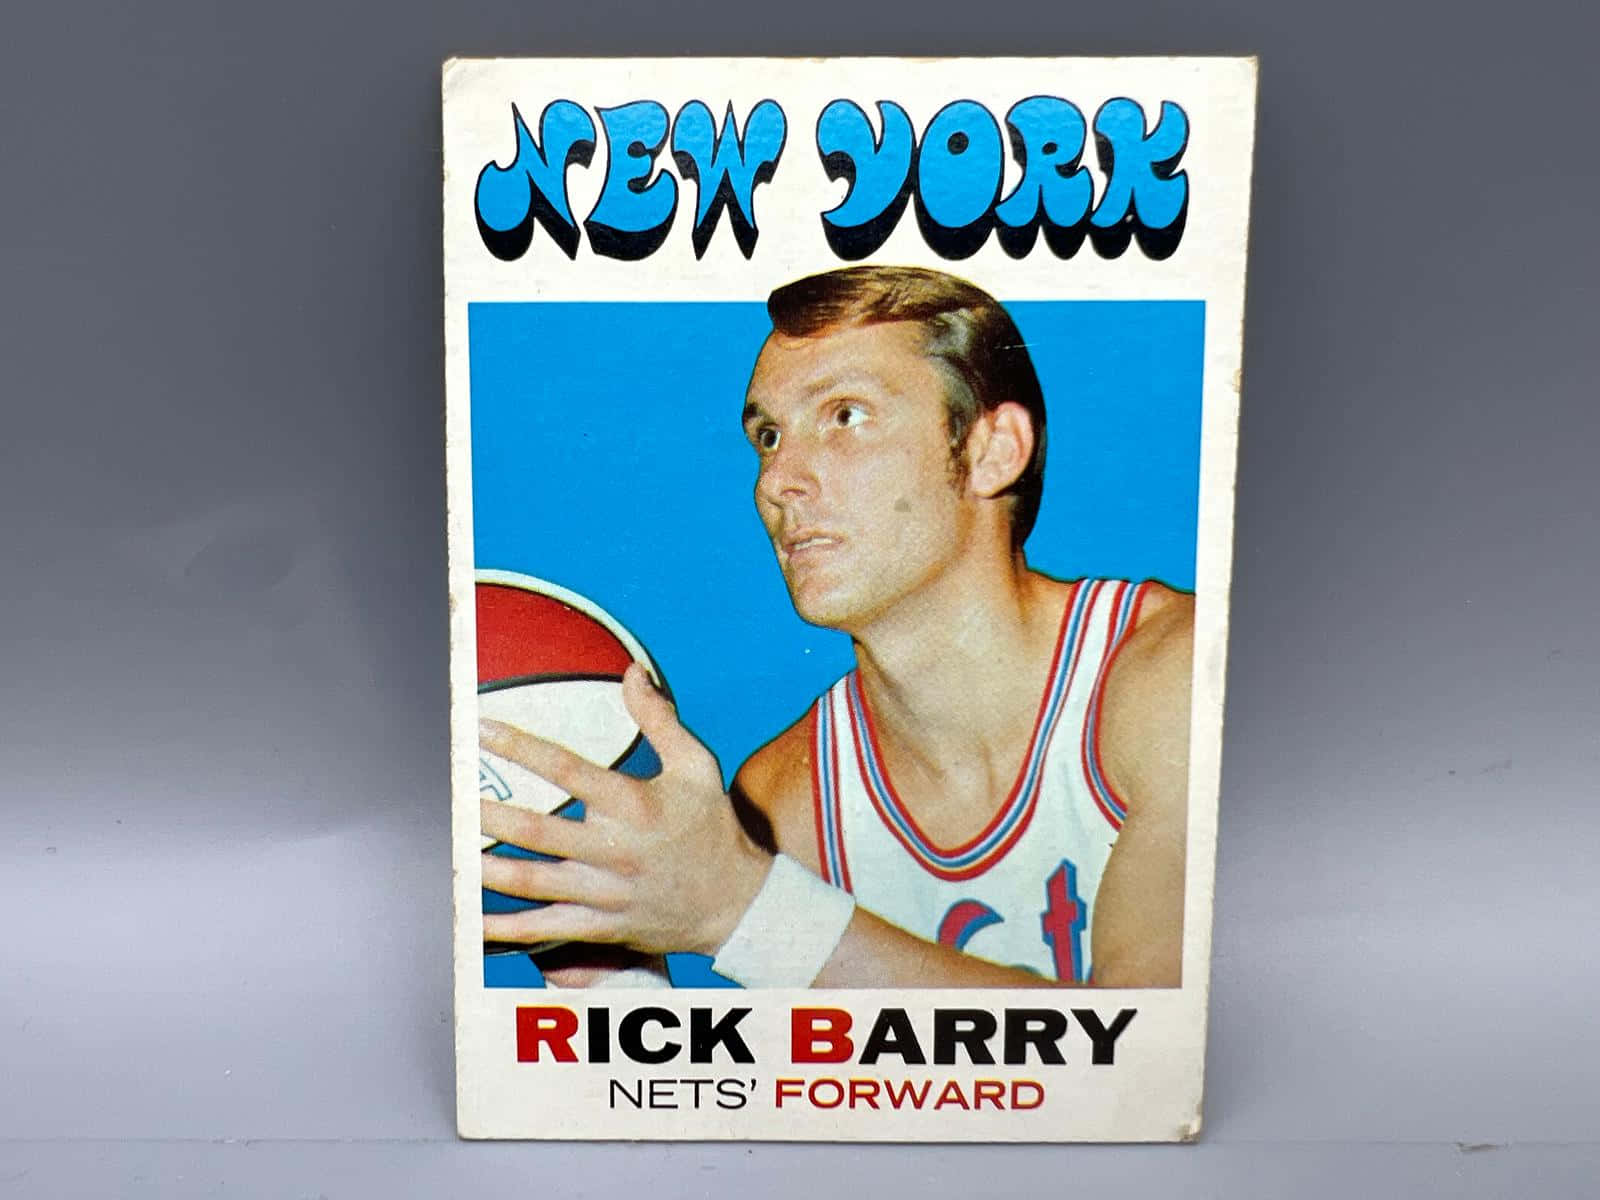 NBANew York Nets Rick Barry Poster- NBA New York Nets Rick Barry Poster Wallpaper